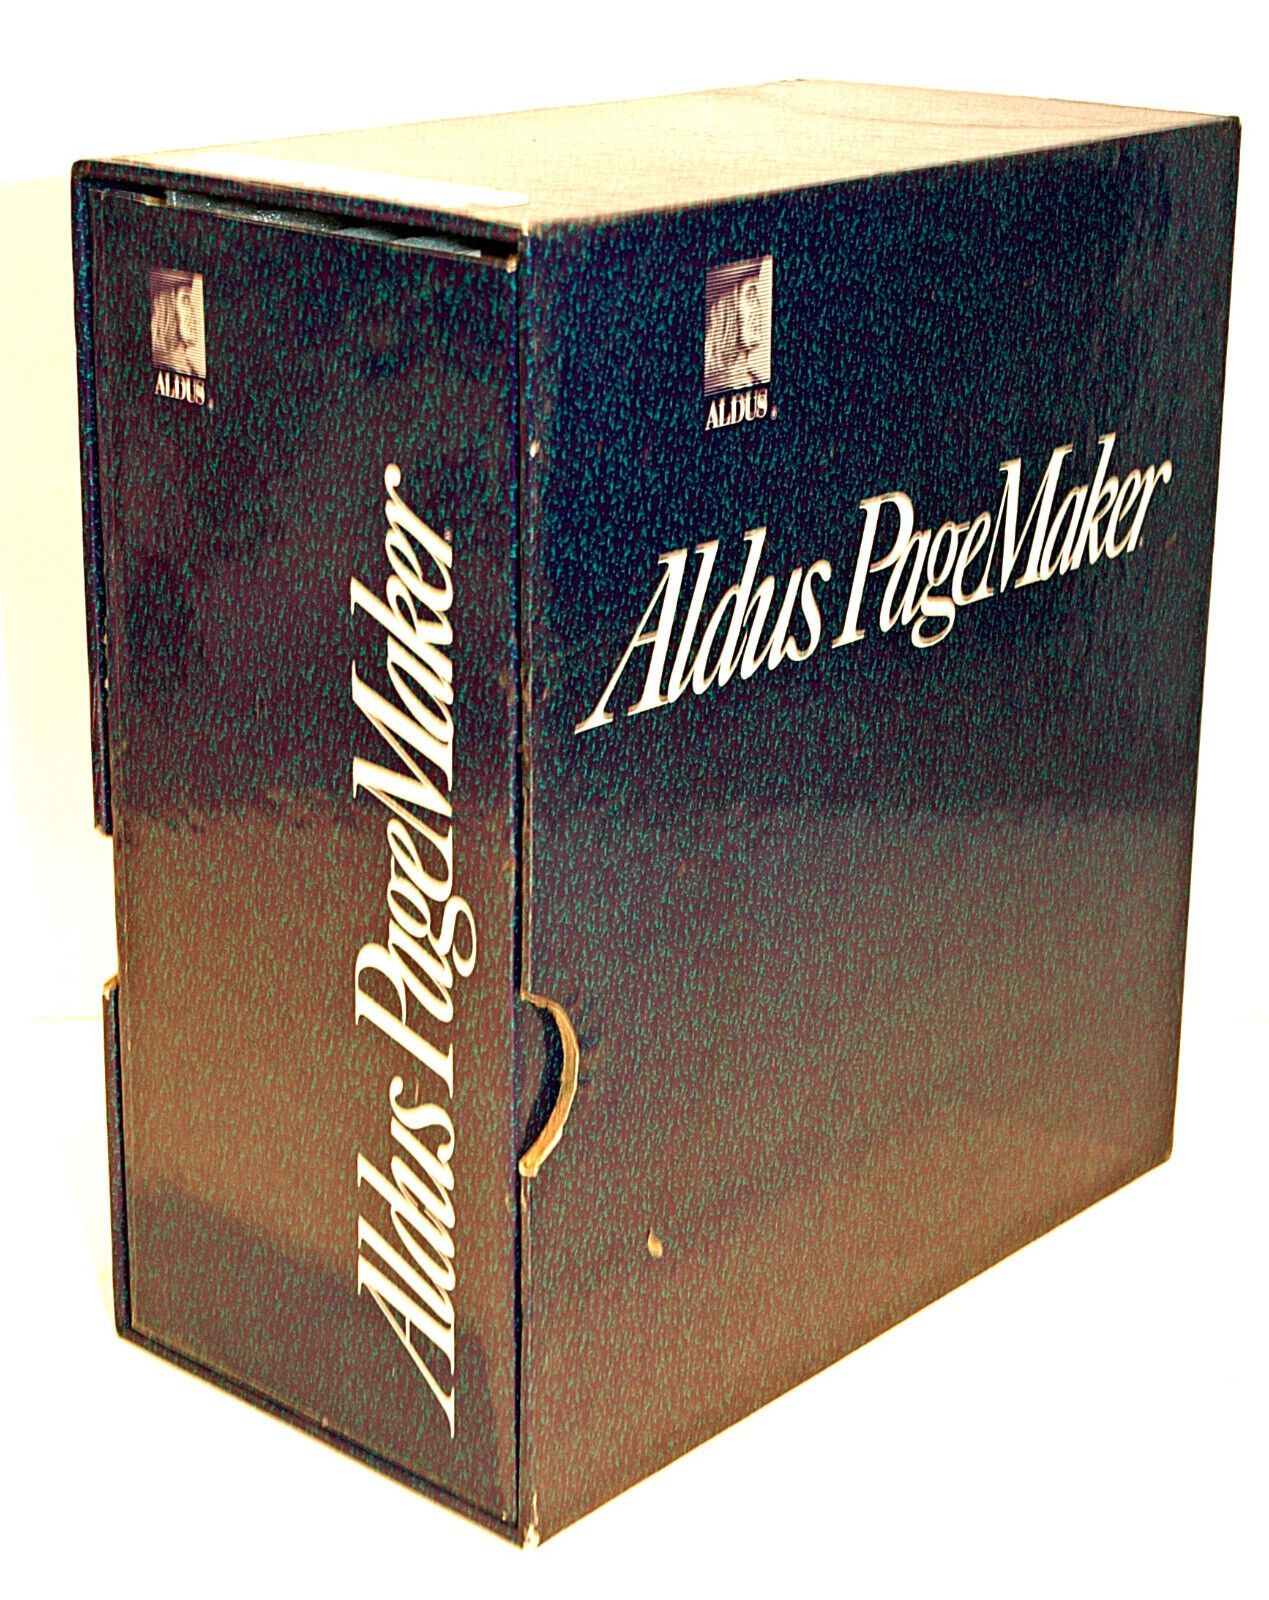 Aldus PageMaker Version 3.0 full boxed set for Vintage Apple Macintosh Computer